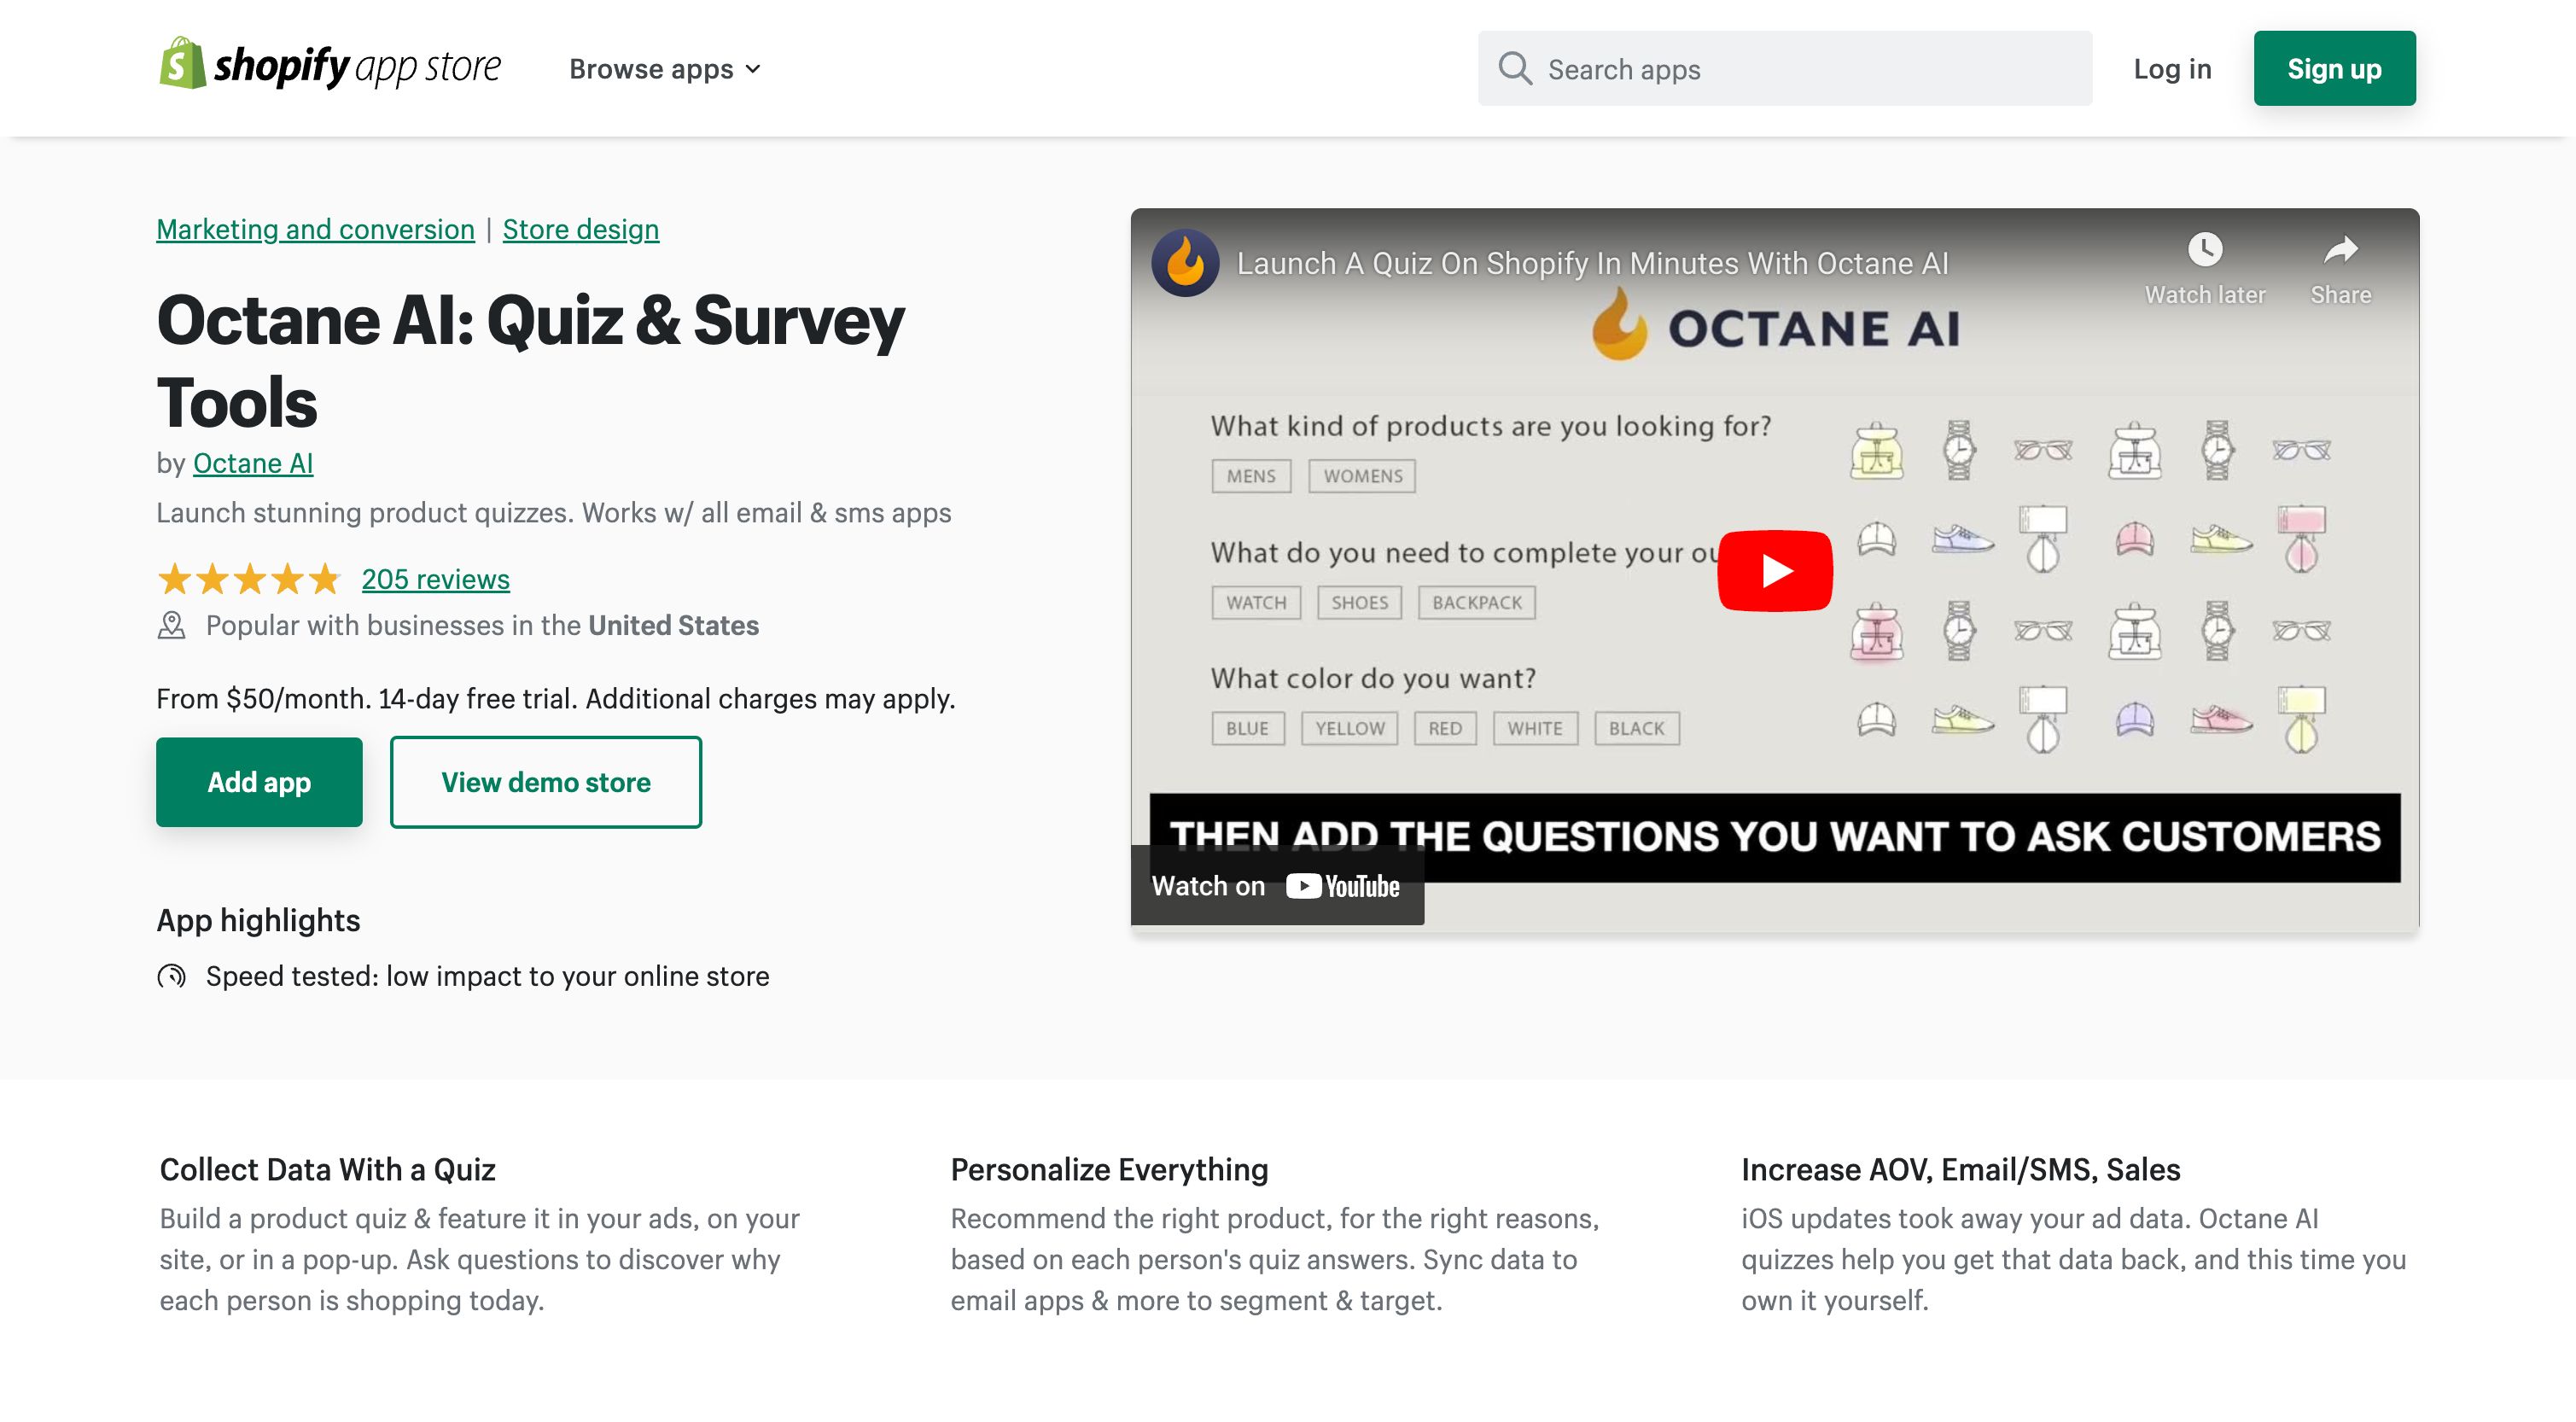 Octane AI: Quiz & Survey Tools - Launch stunning product quizzes | Shopify App Store